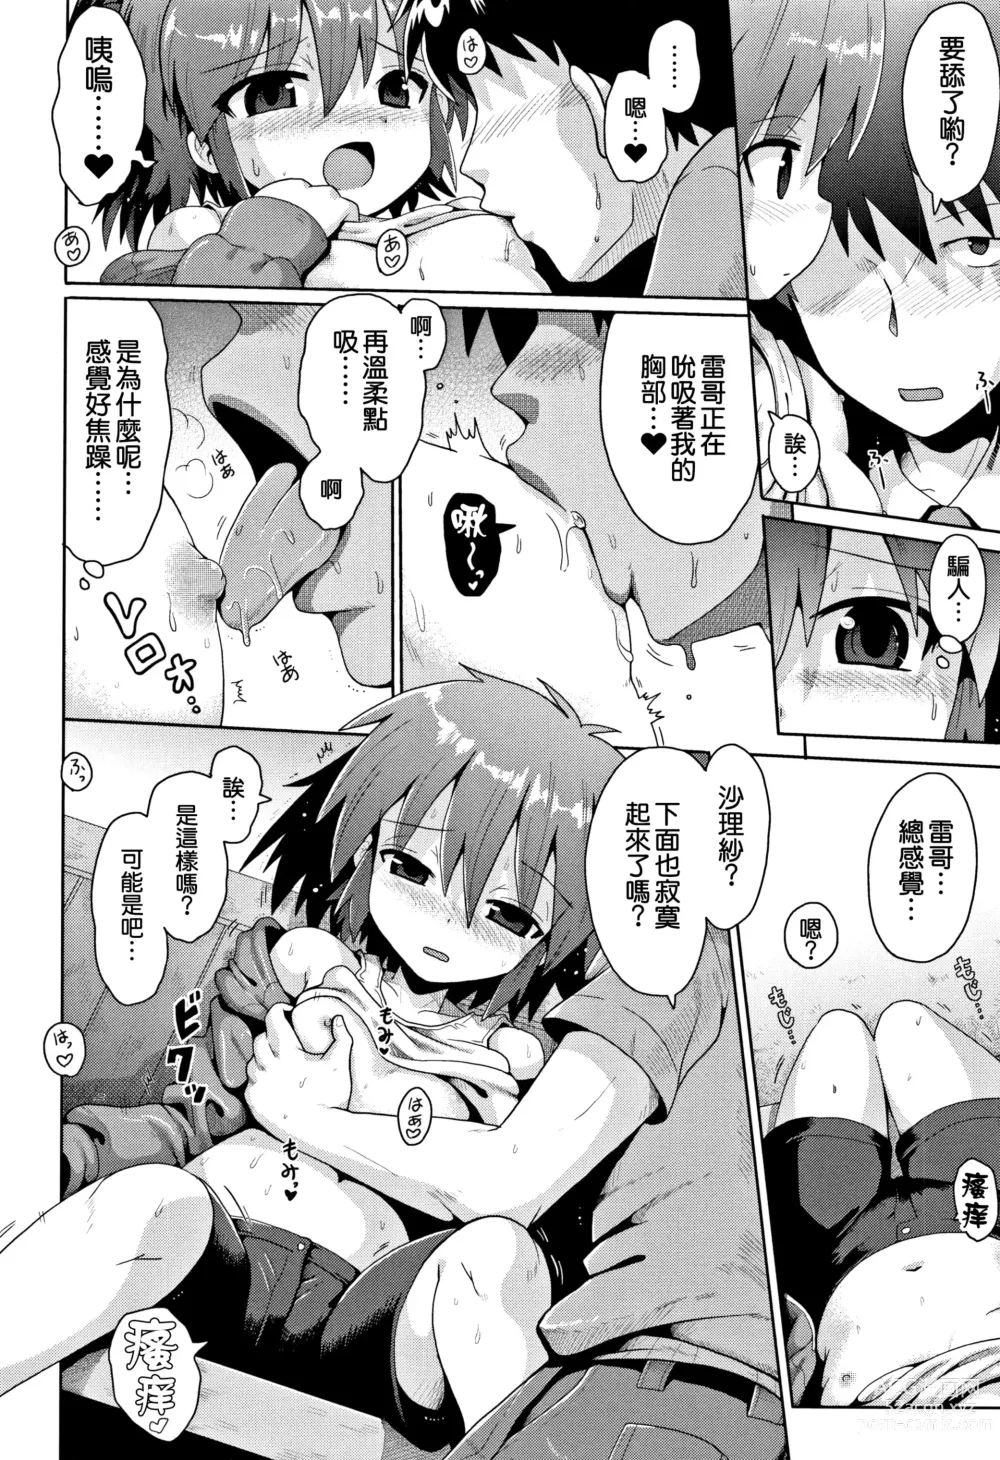 Page 13 of manga Trident 1 + 2 + 3